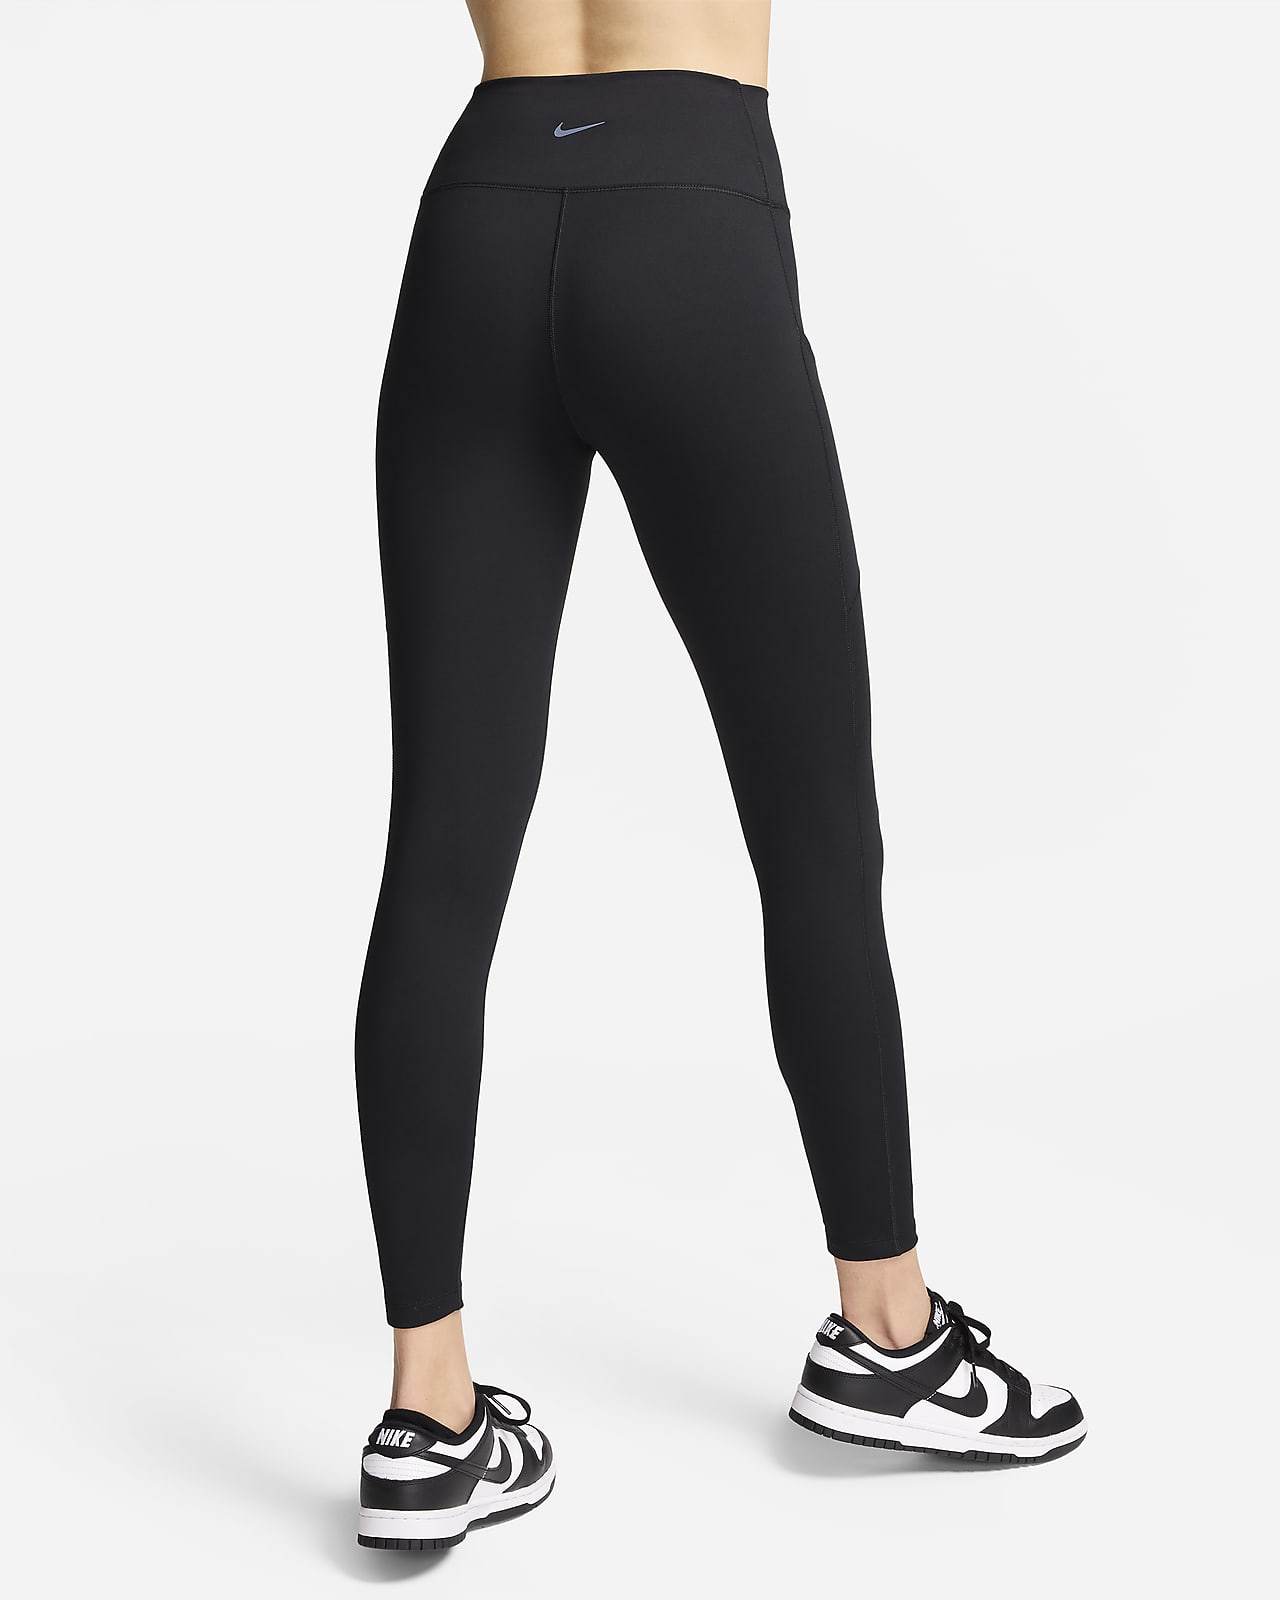 Pockets Tights & Leggings. Nike IN